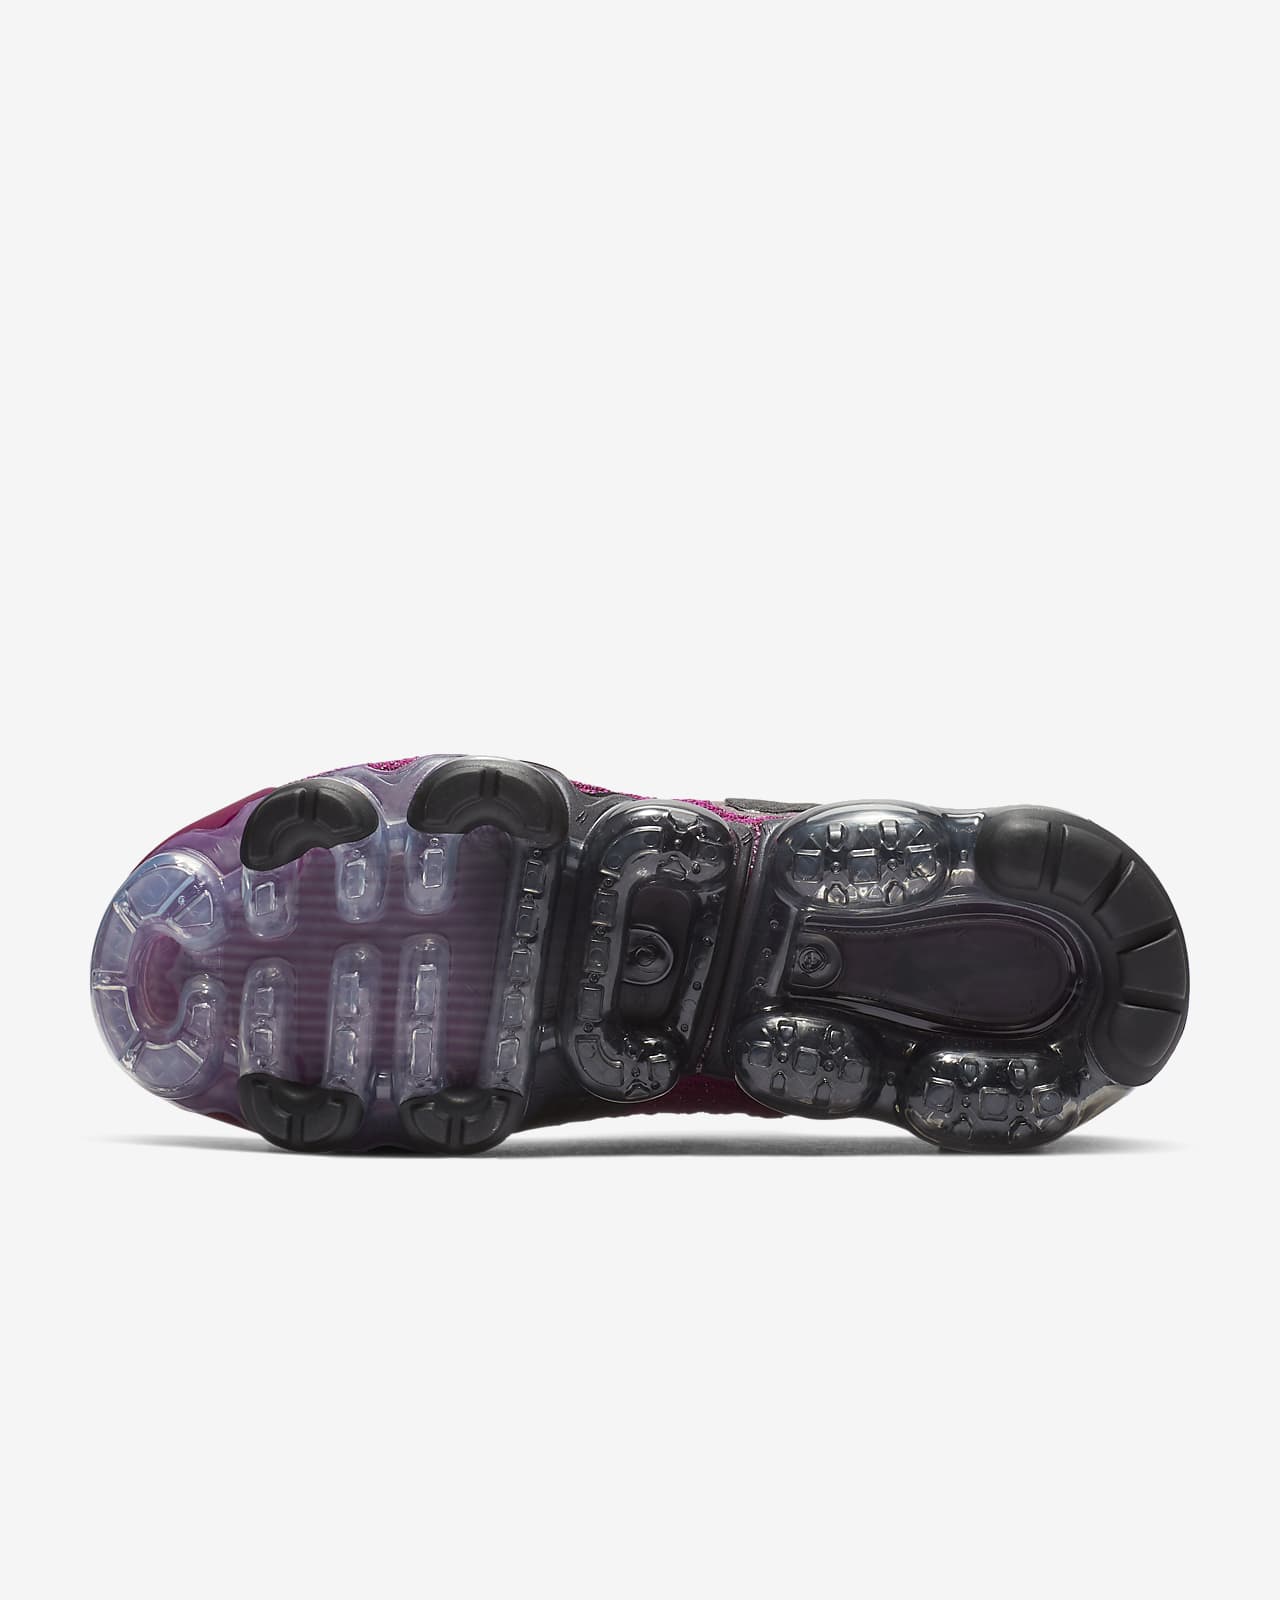 women's nike air vapormax flyknit 2 running shoes $190.00